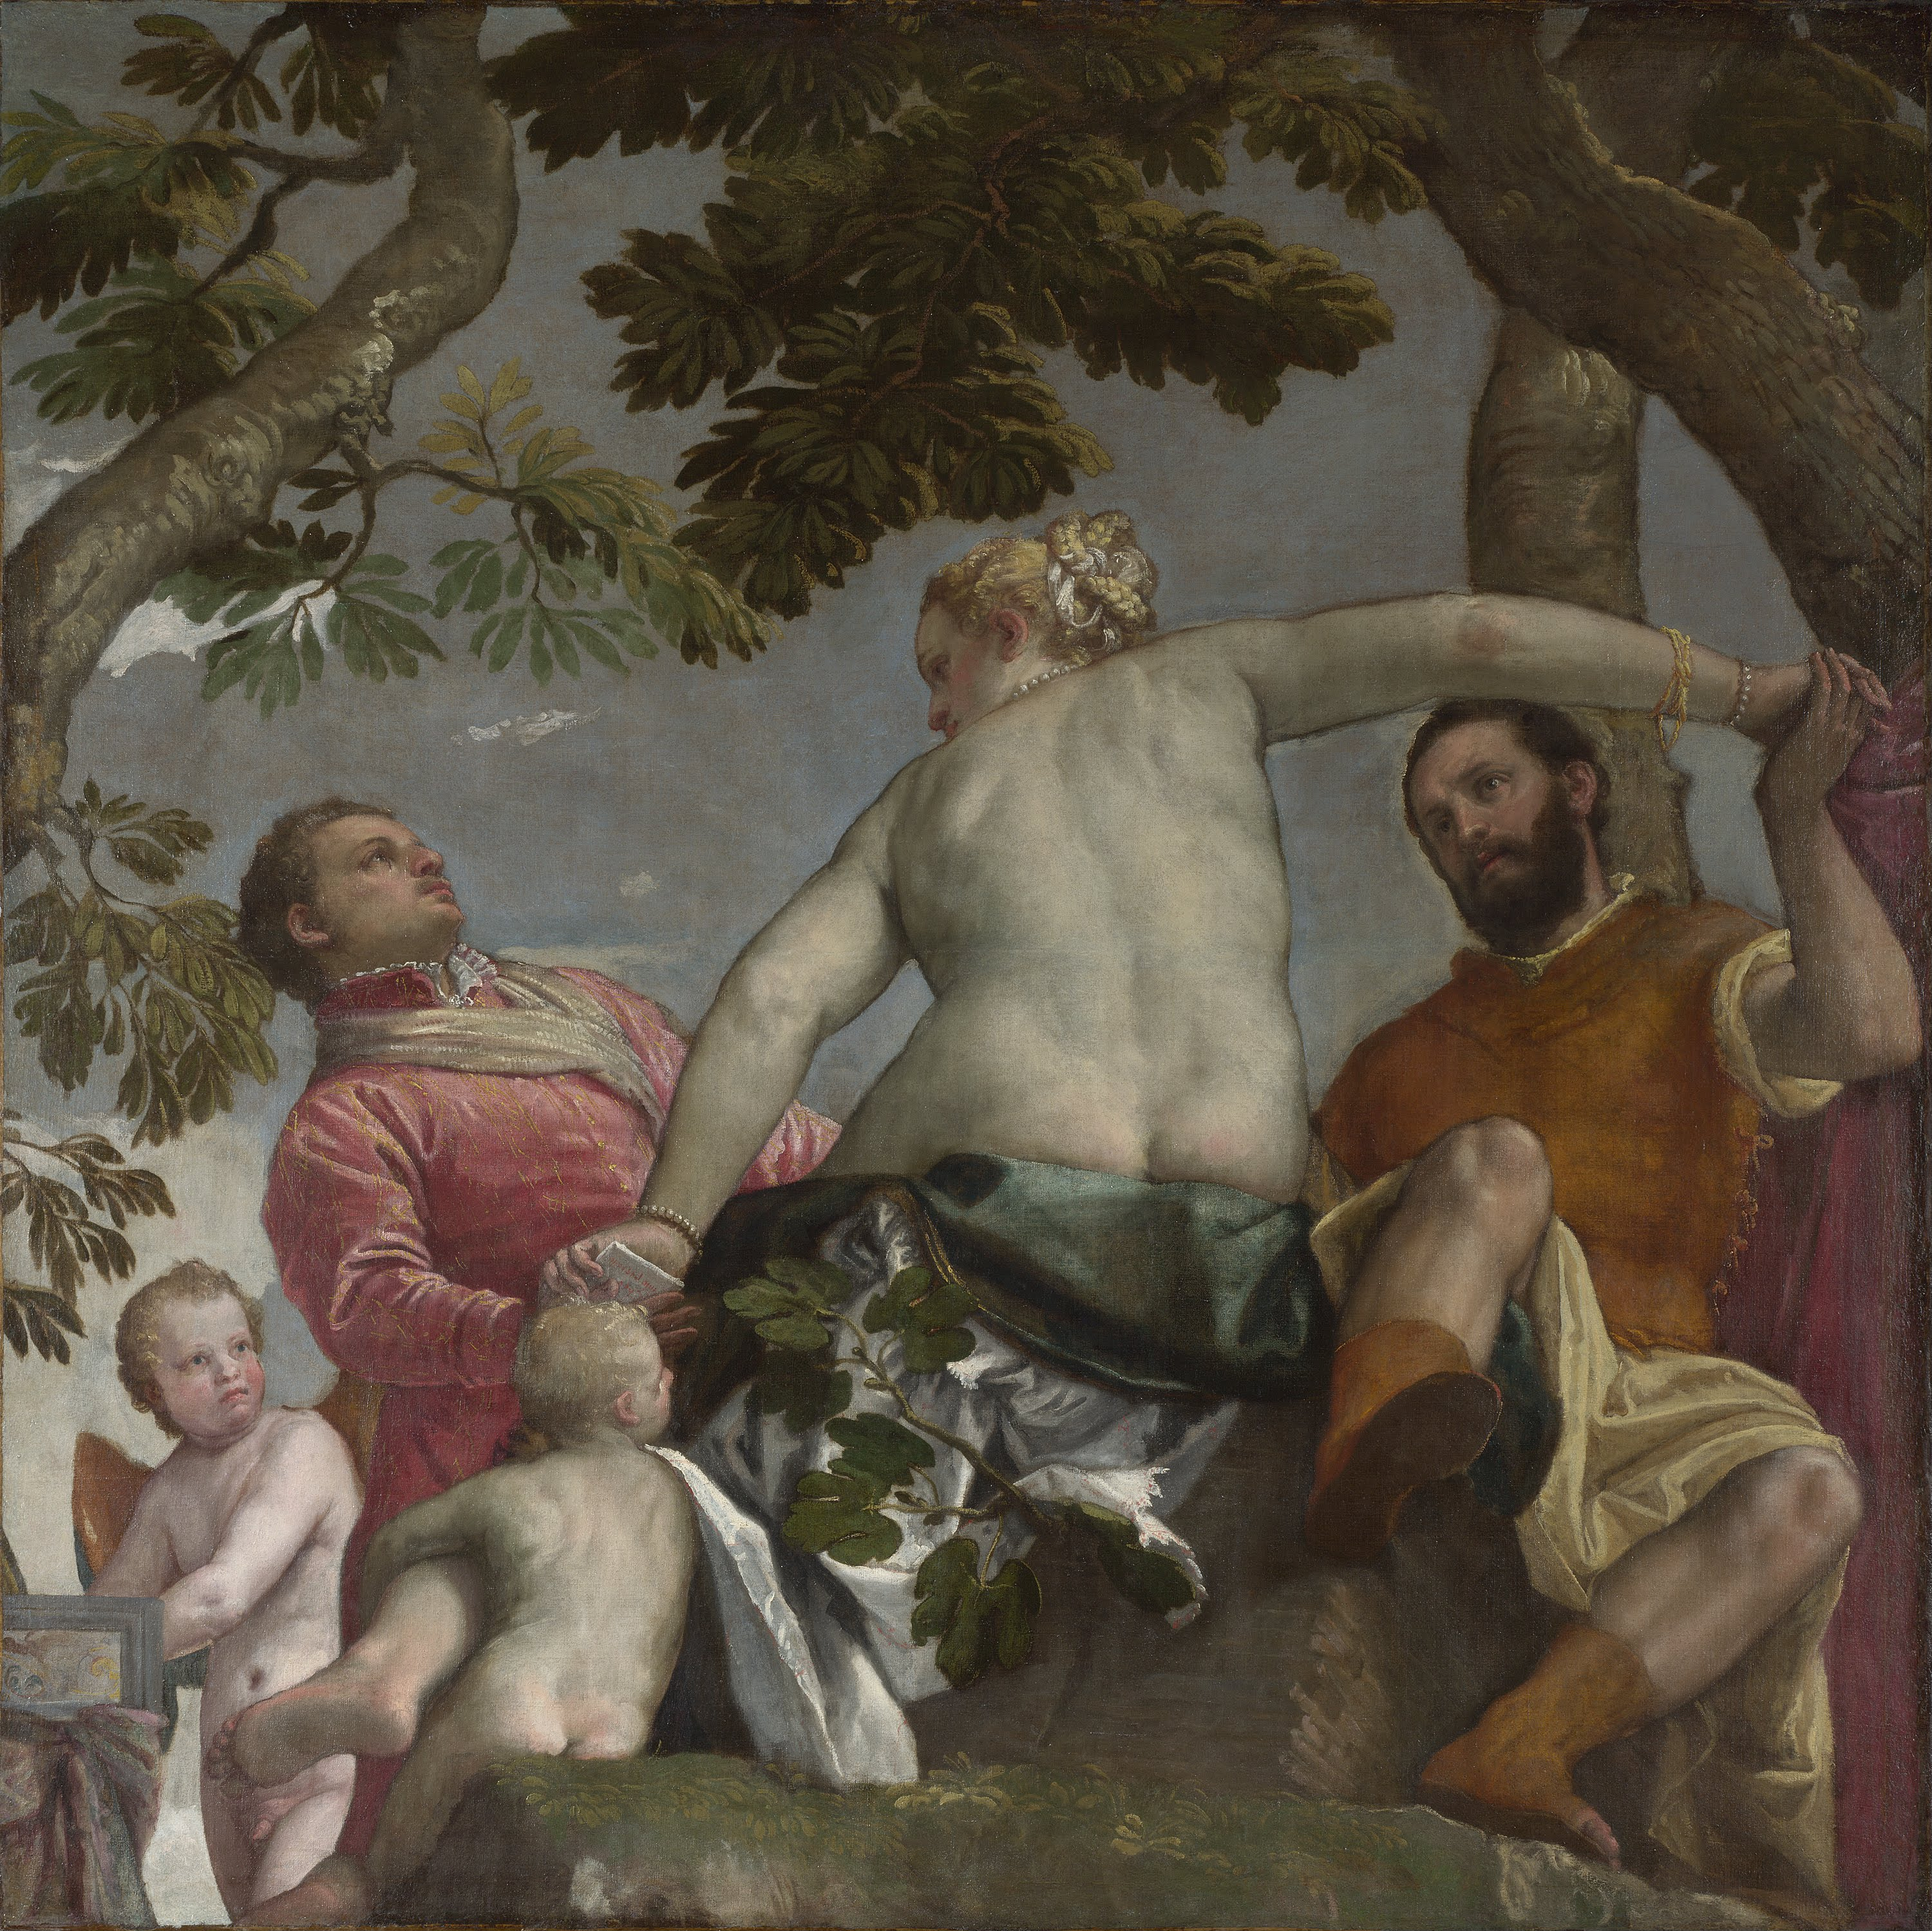 Untreue by Paolo Veronese - 1575 - 189,9 x 189,9 cm National Gallery